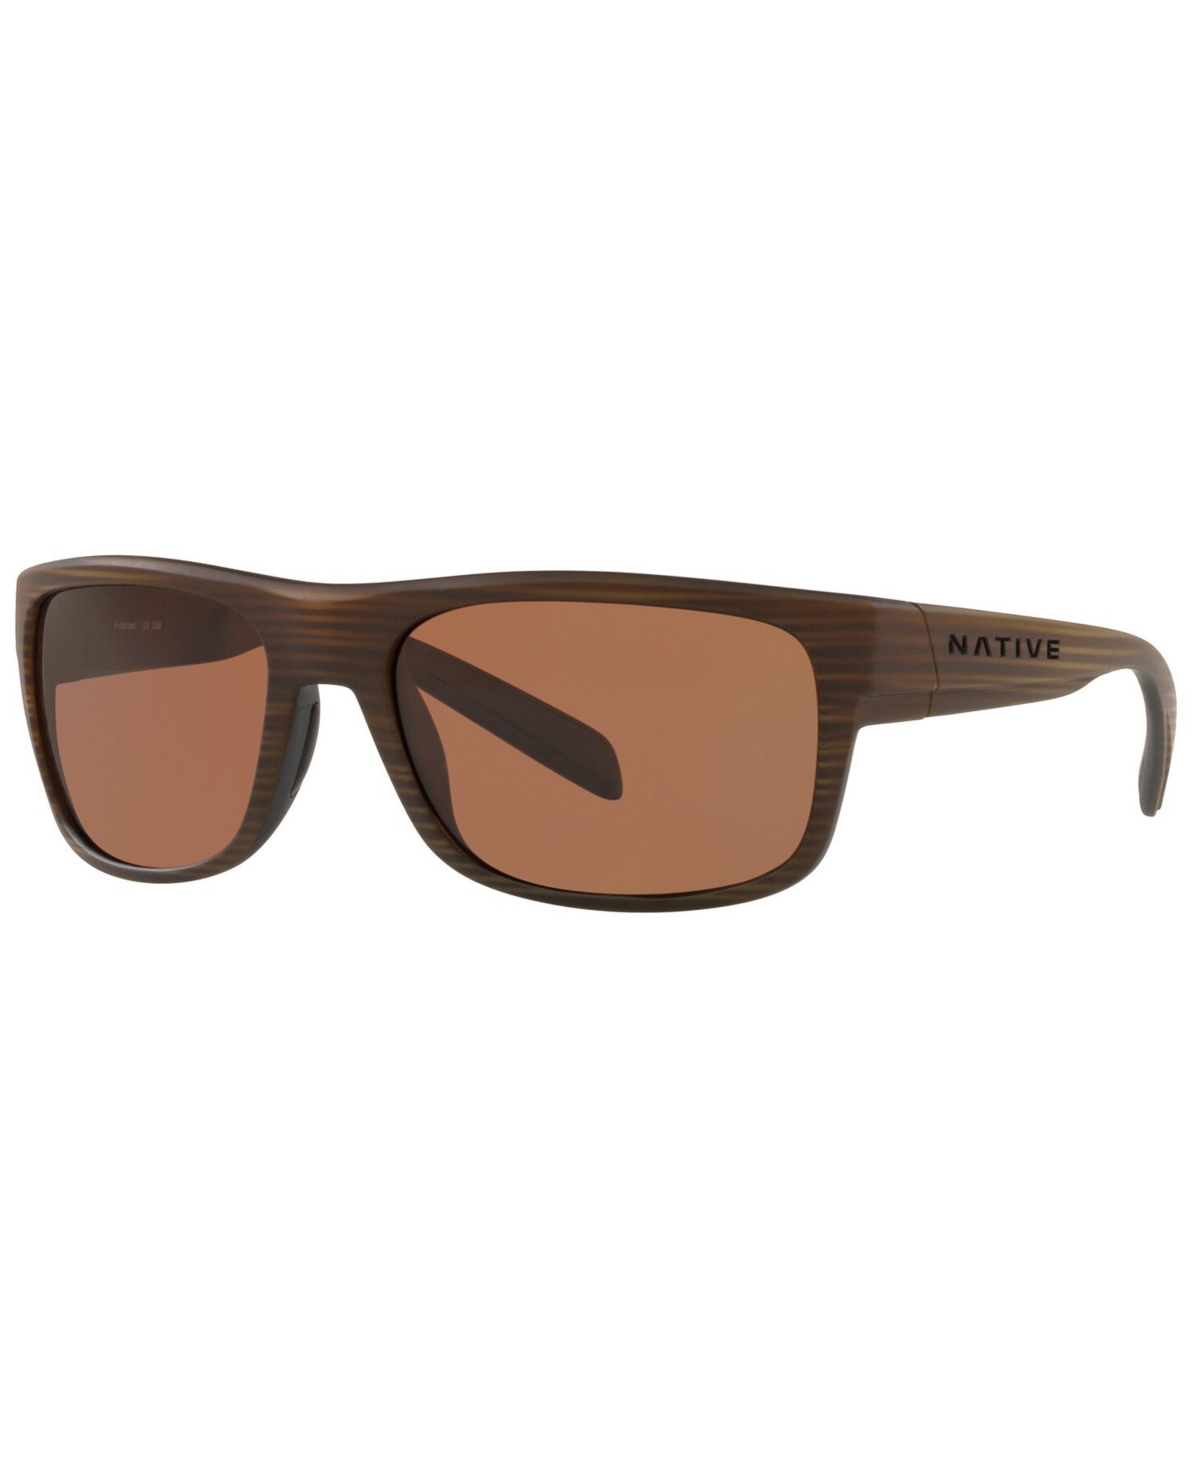 Native Unisex Polarized Sunglasses, XD9003 58 - WOOD/BROWN